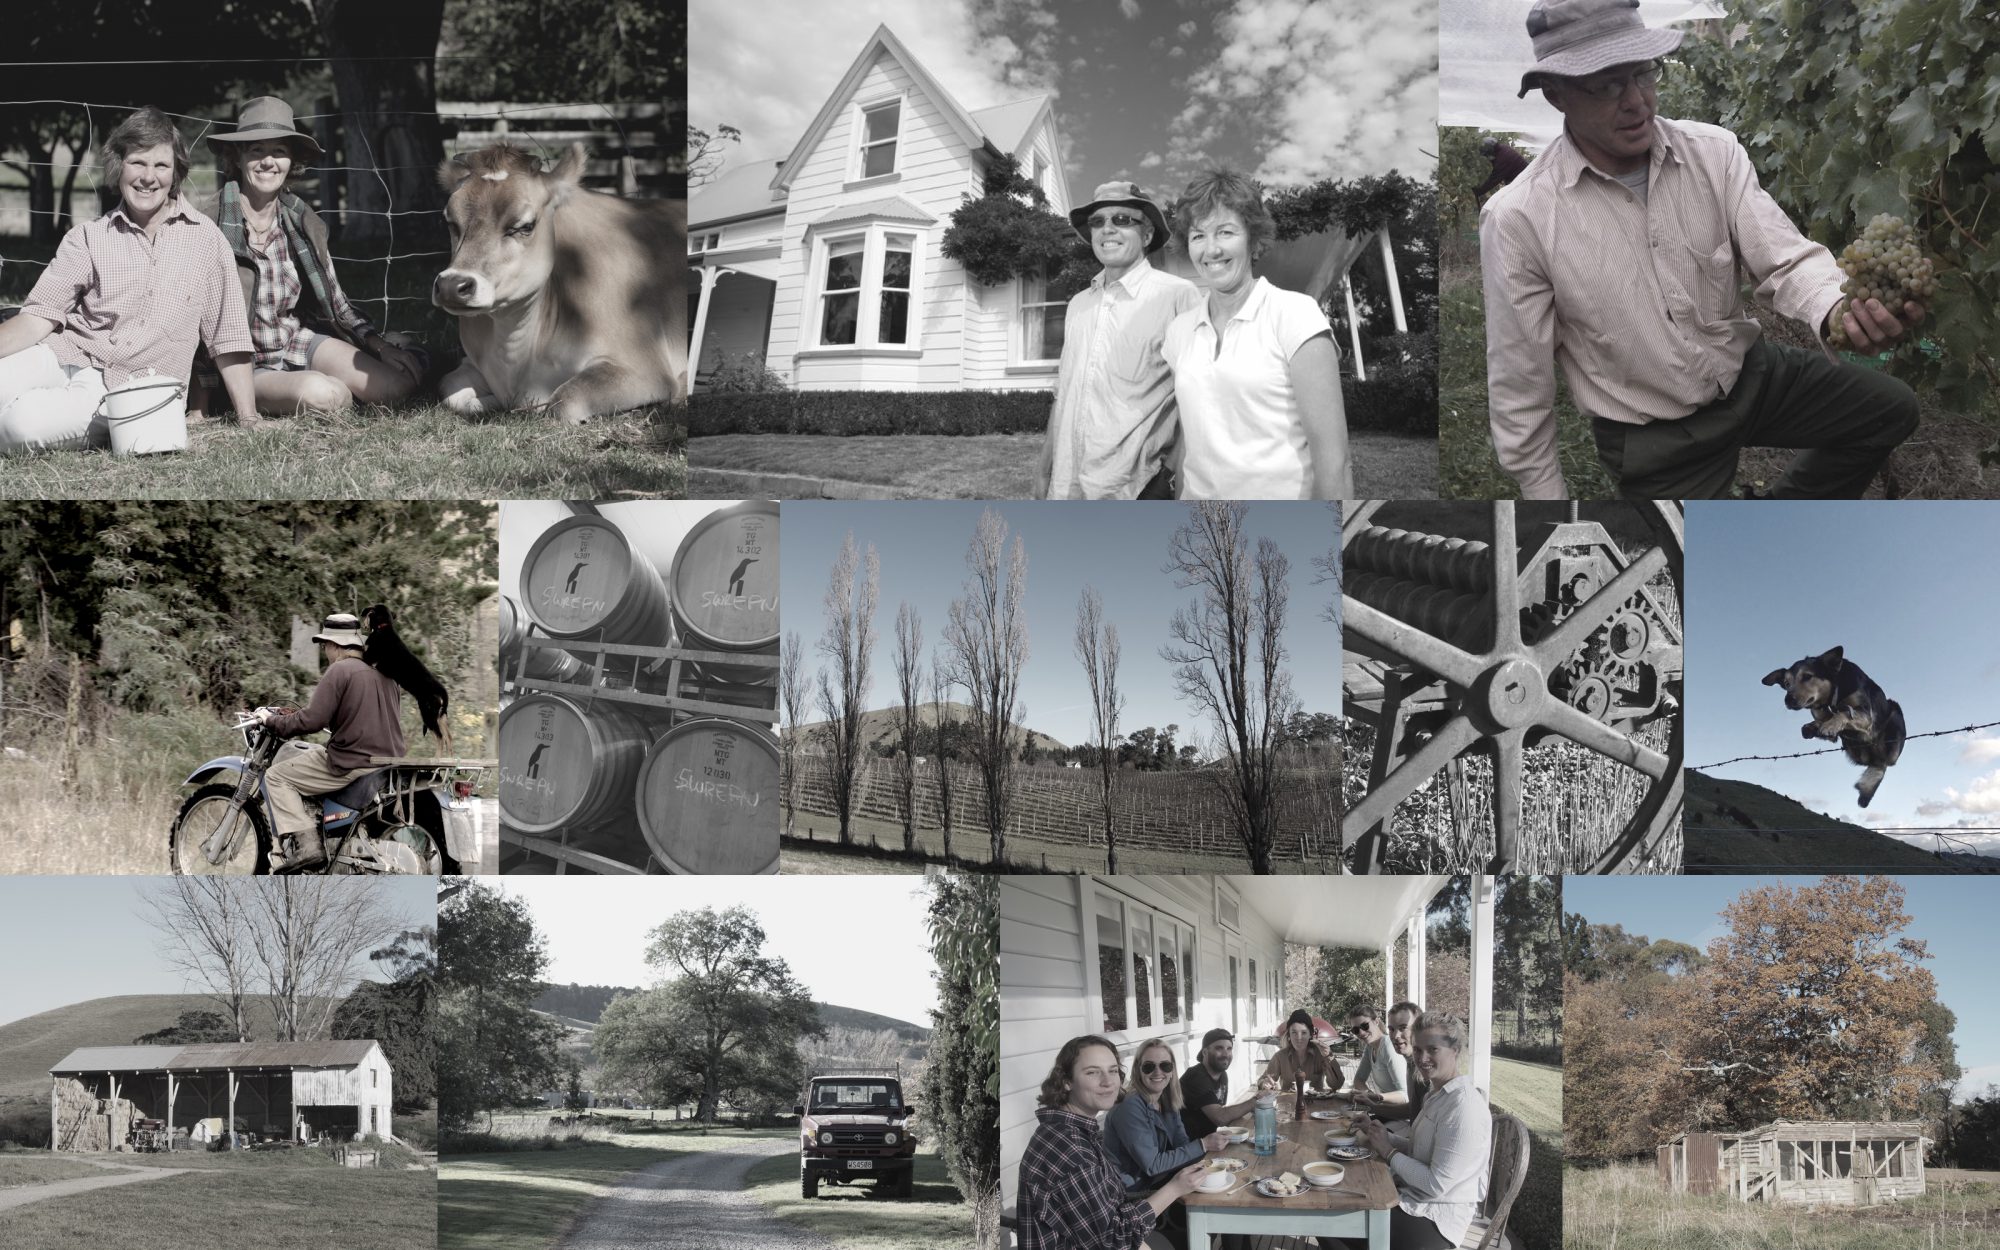 The Wrekin Vineyard are a family owed vineyard making great wines in the Marlborough region